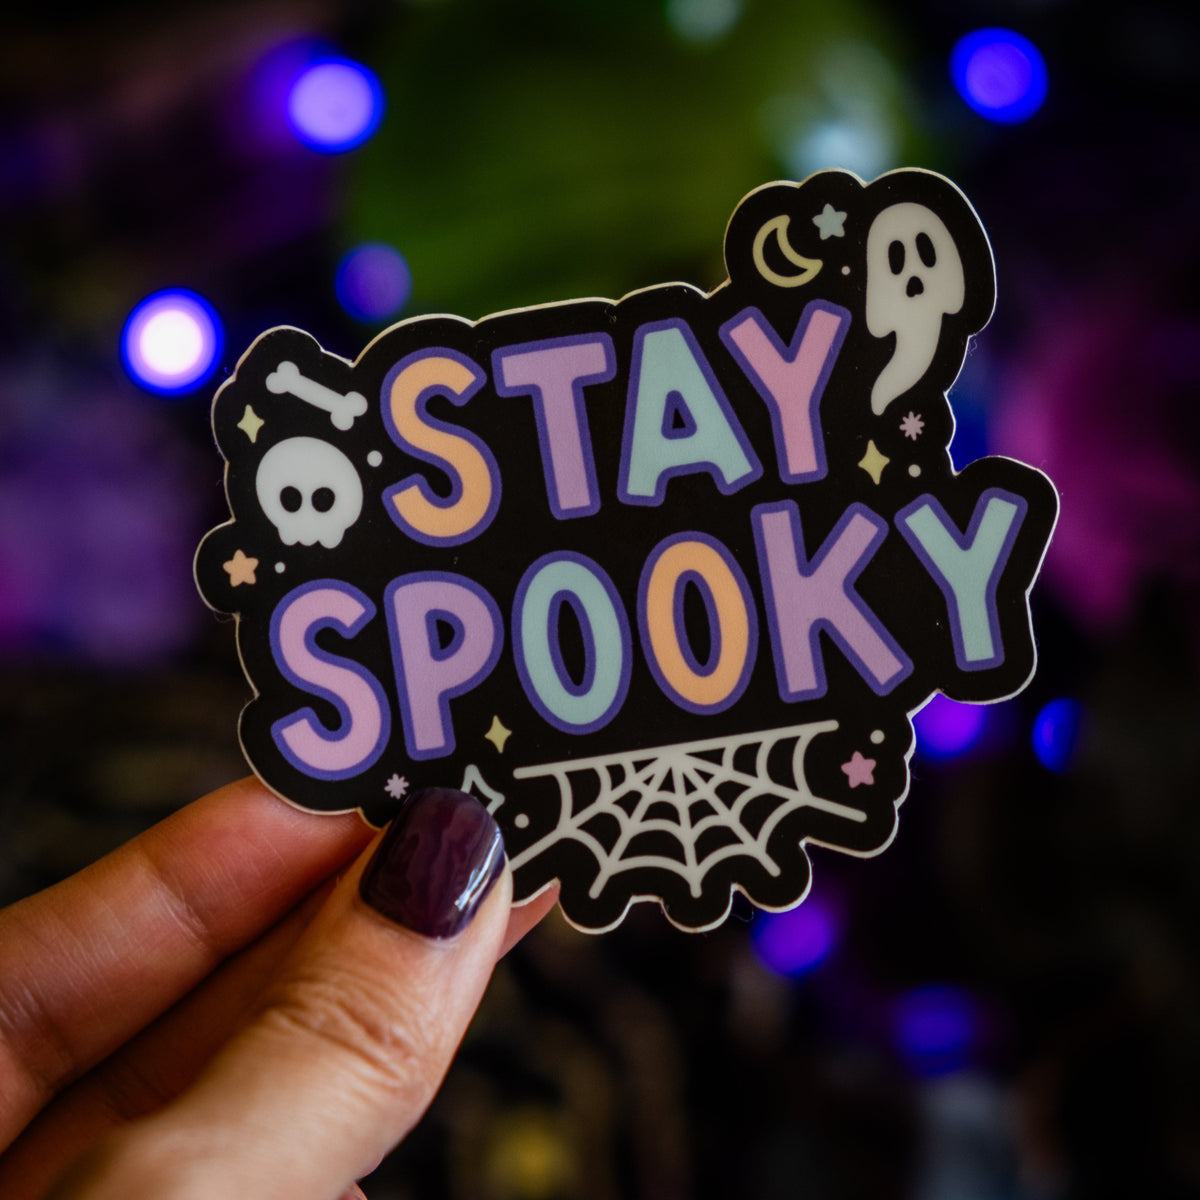 Stay Spooky Spooky Cutie Collection Vinyl Sticker